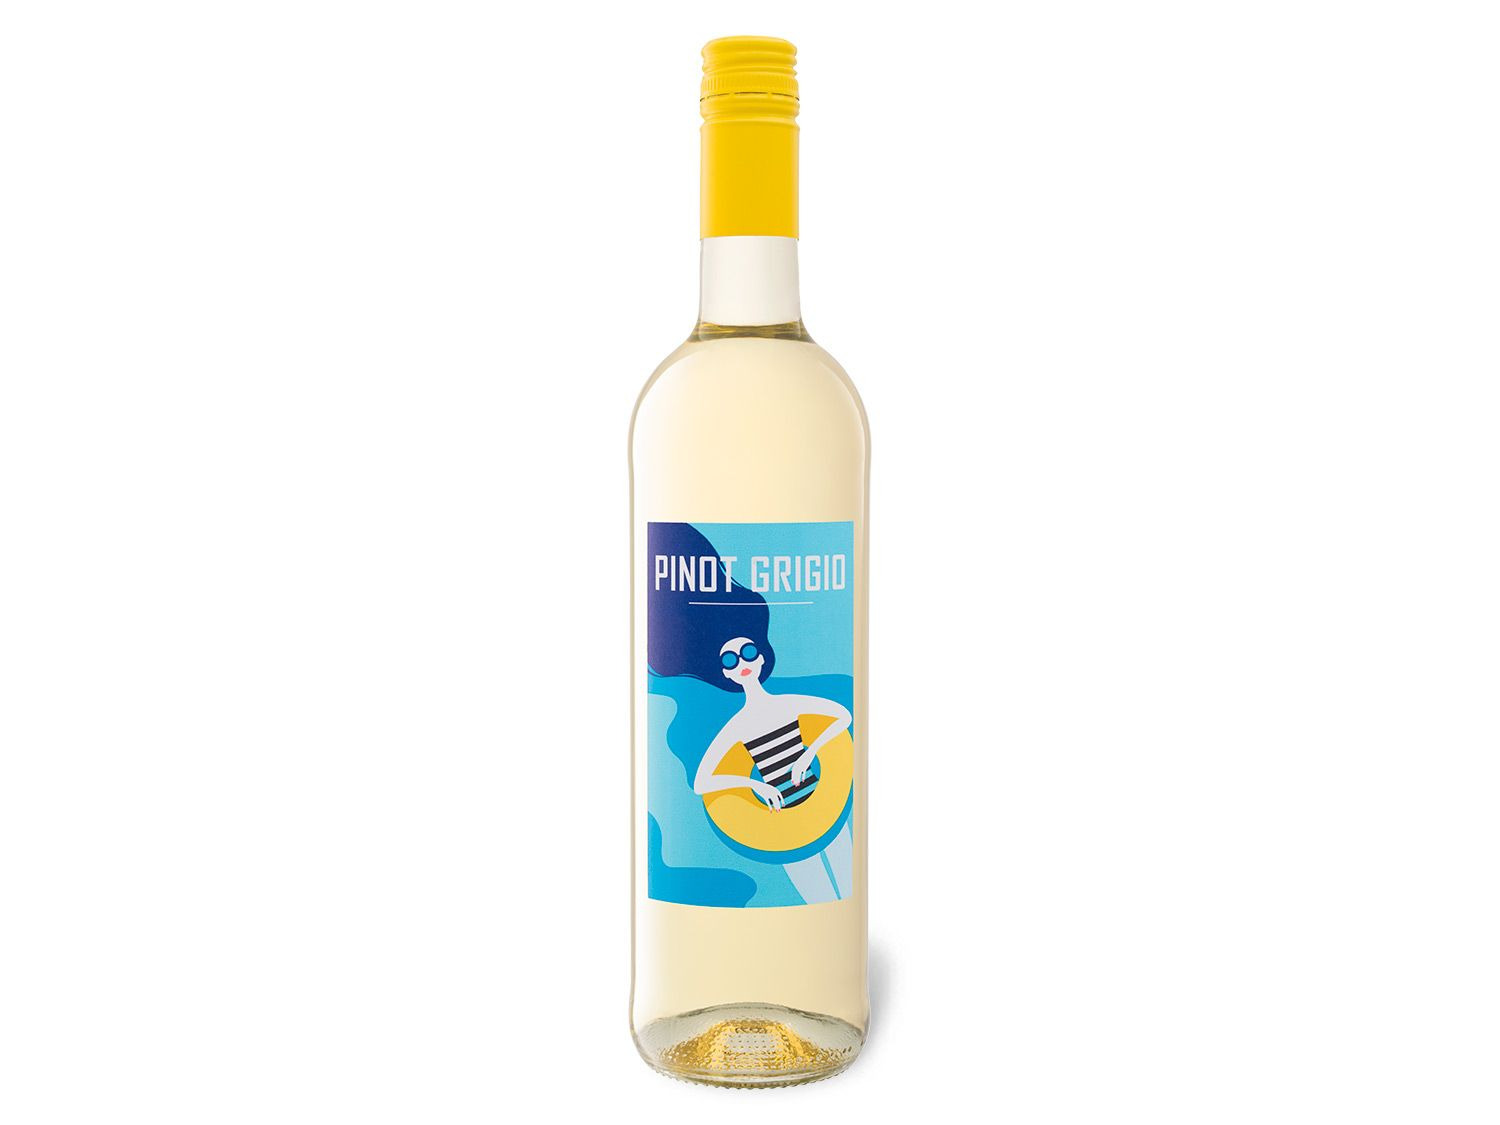 halbtrocken, | LIDL Grigio Pinot 2021 PDO Weißwein